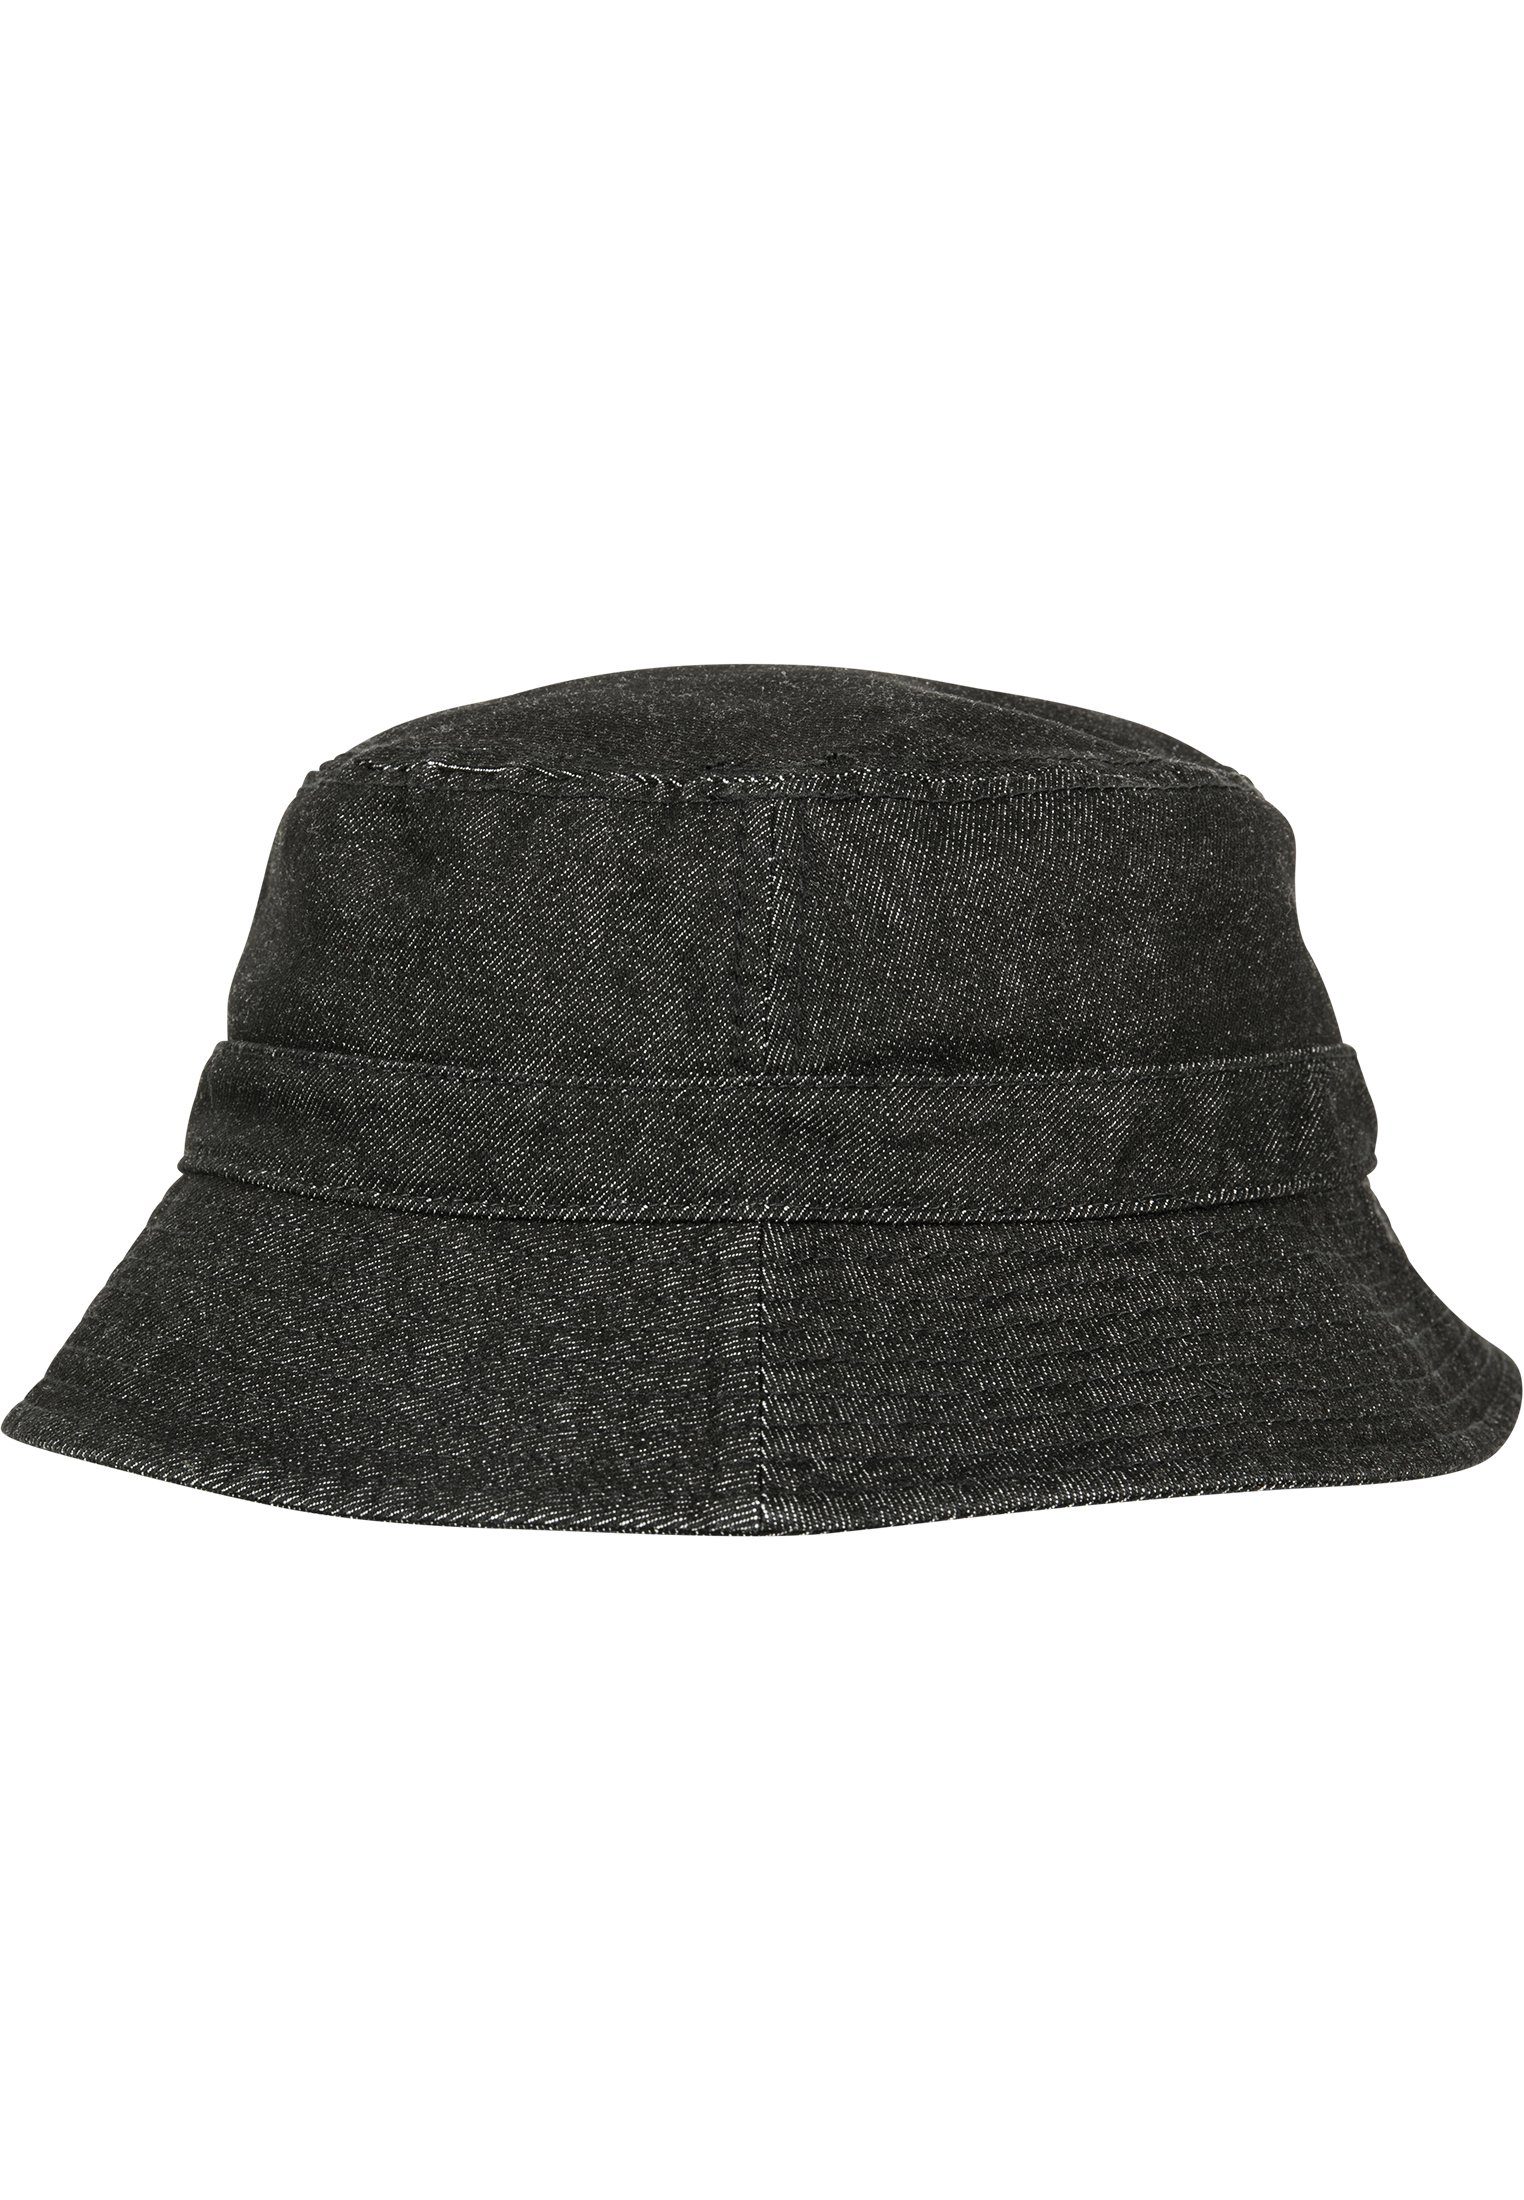 Flexfit Flex Cap Bucket Hat Bucket Denim Hat black/grey